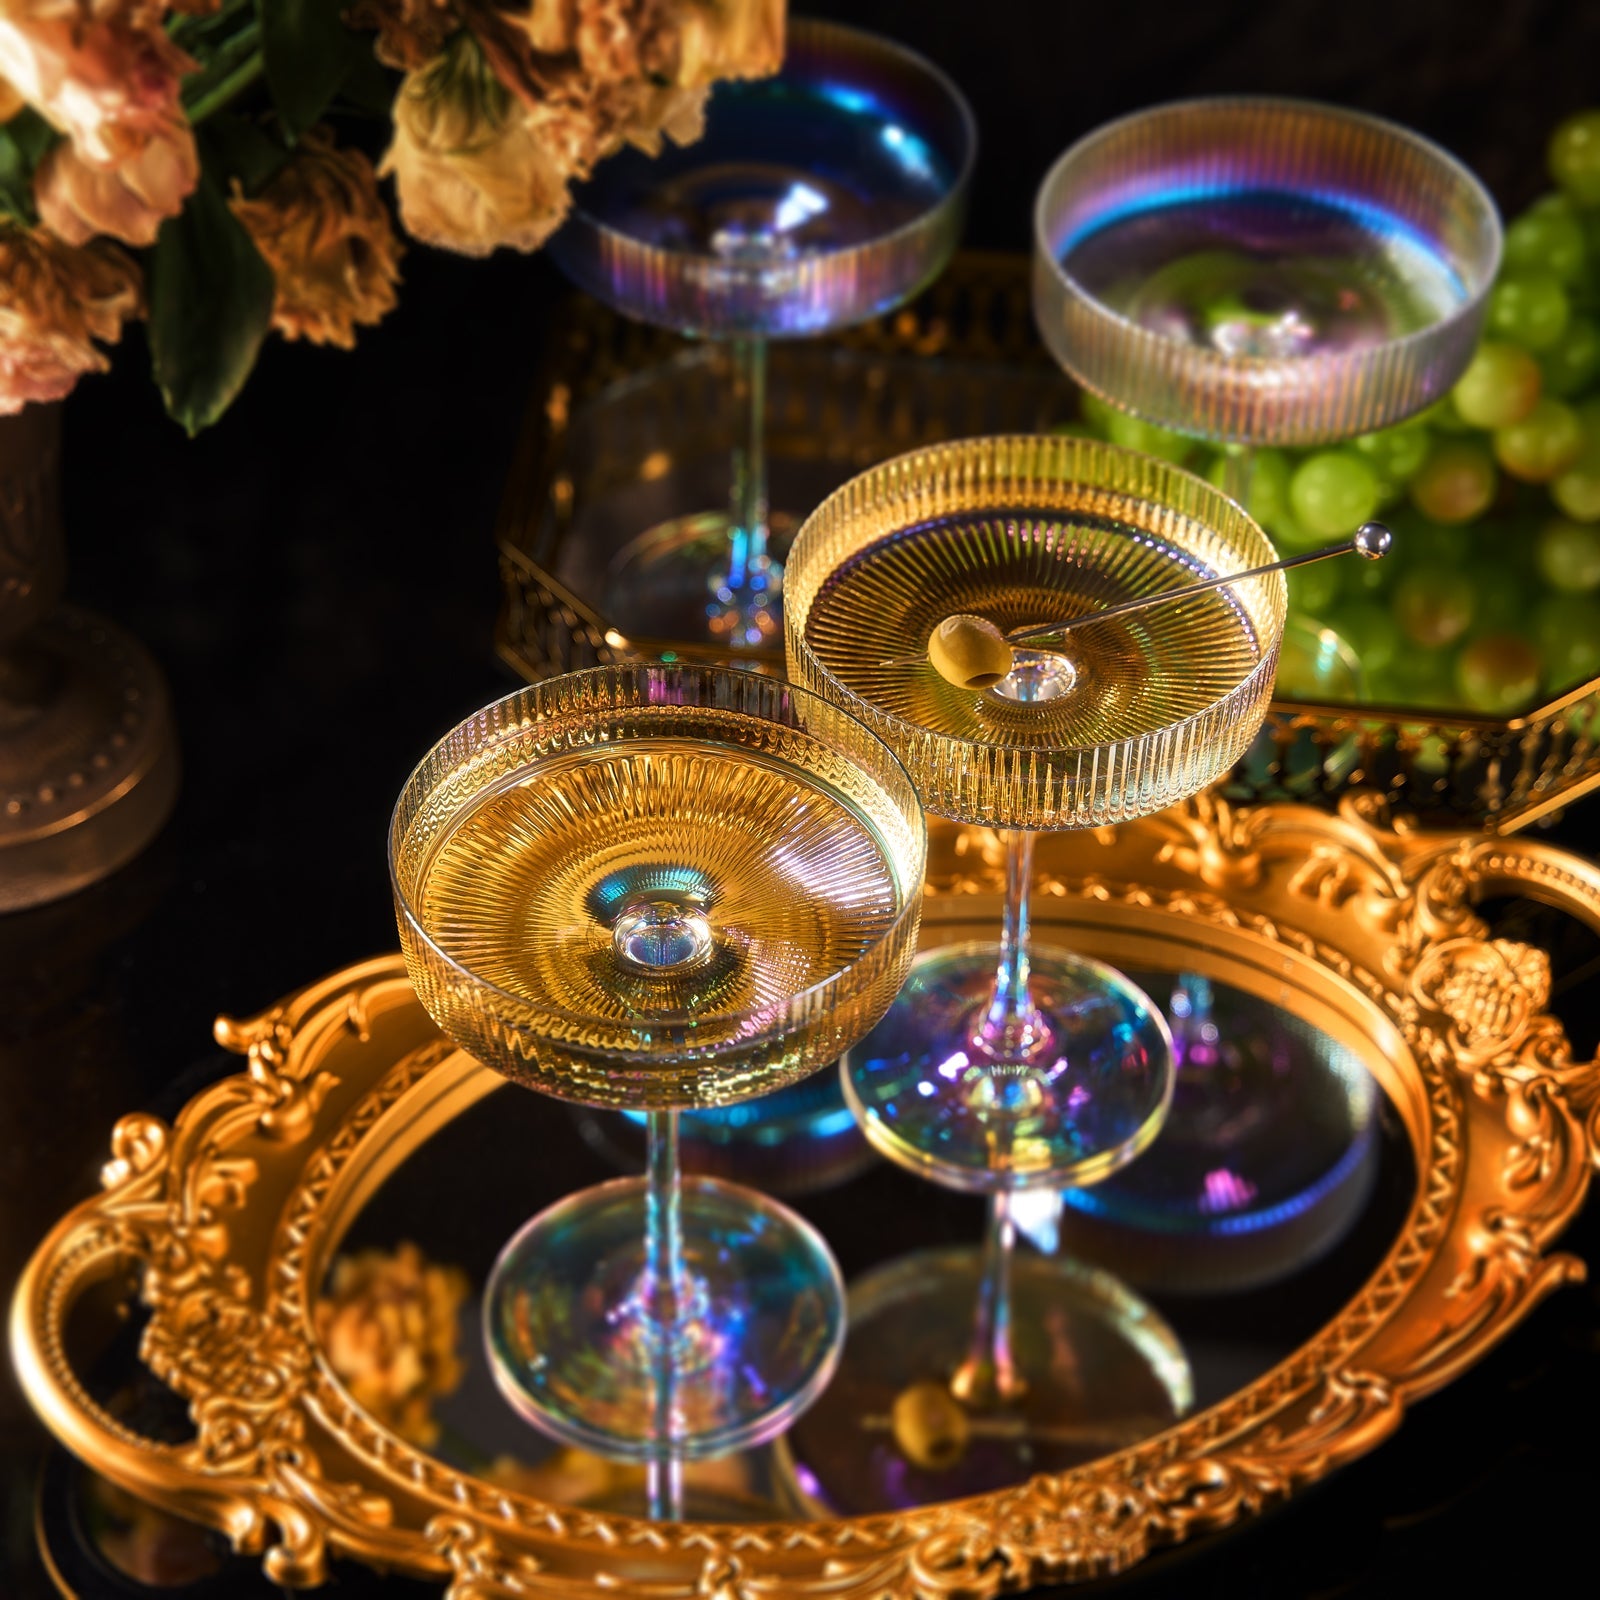 Toscany Iridescent Champagne Glasses, Saucer Glasses Set of 4